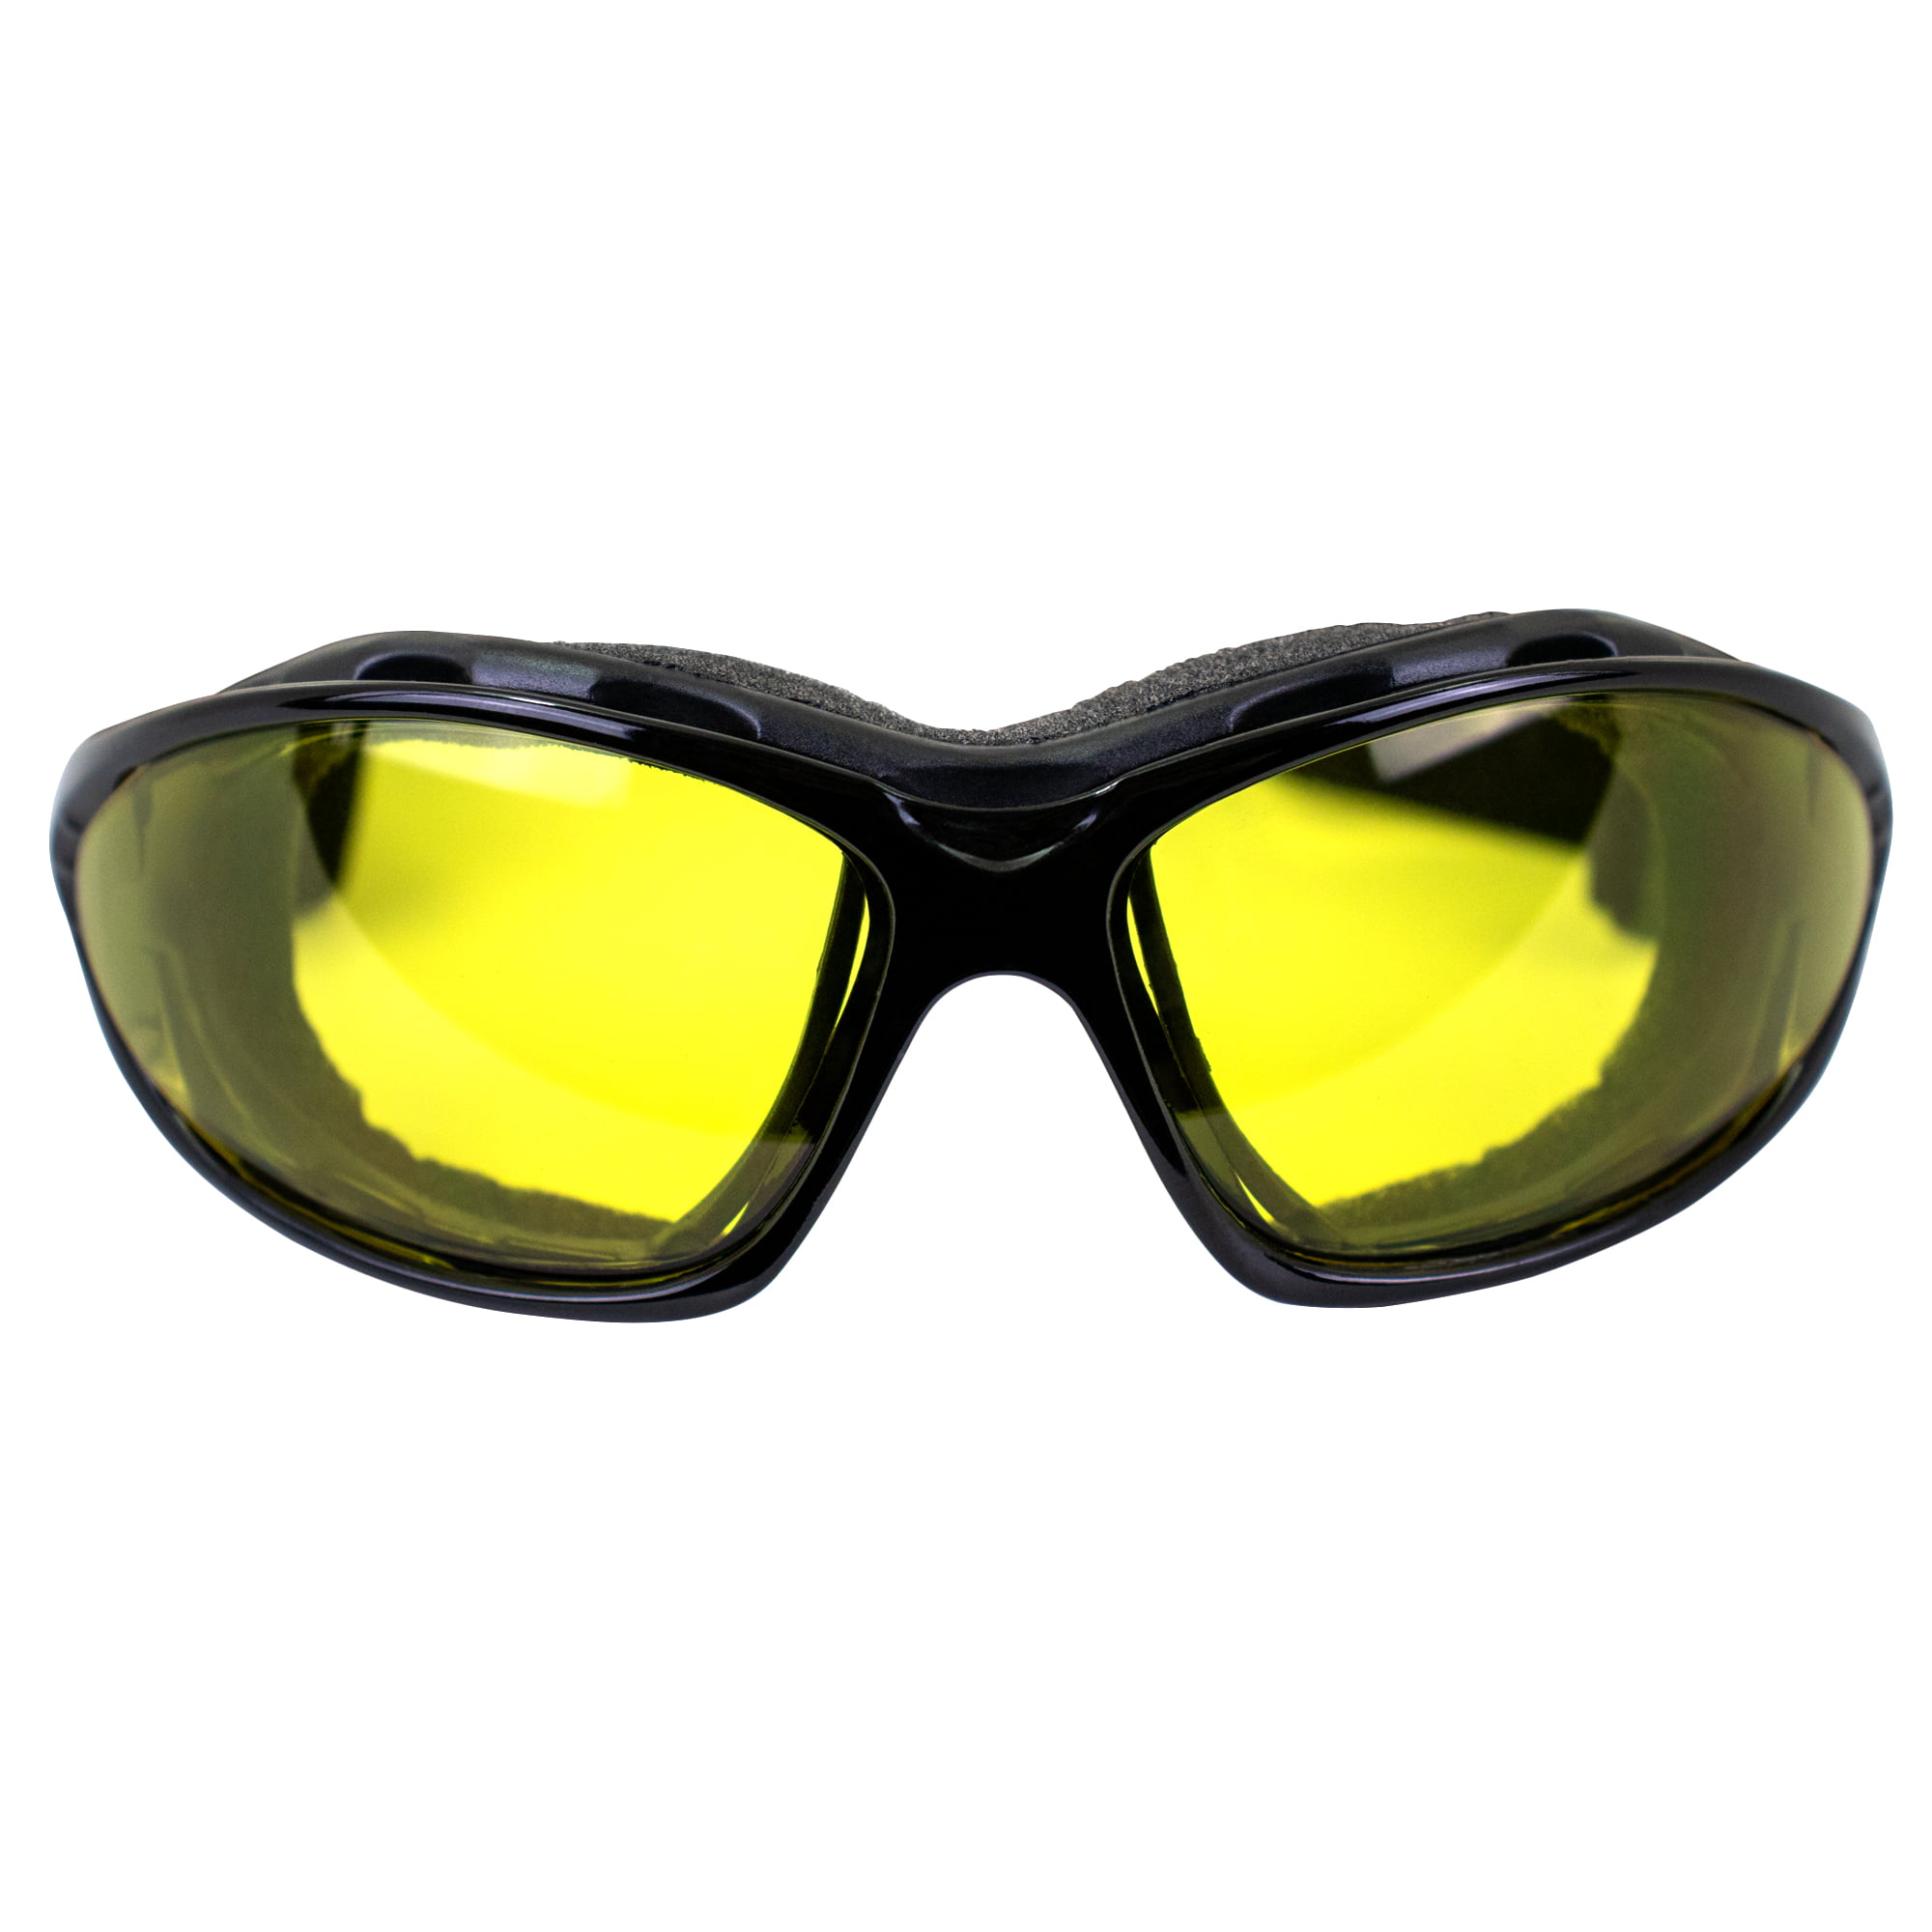 Birdz Eyewear Thrasher Padded Motorcycle Glasses-Convert-to-Goggles (Black  Frame/Yellow Lens)